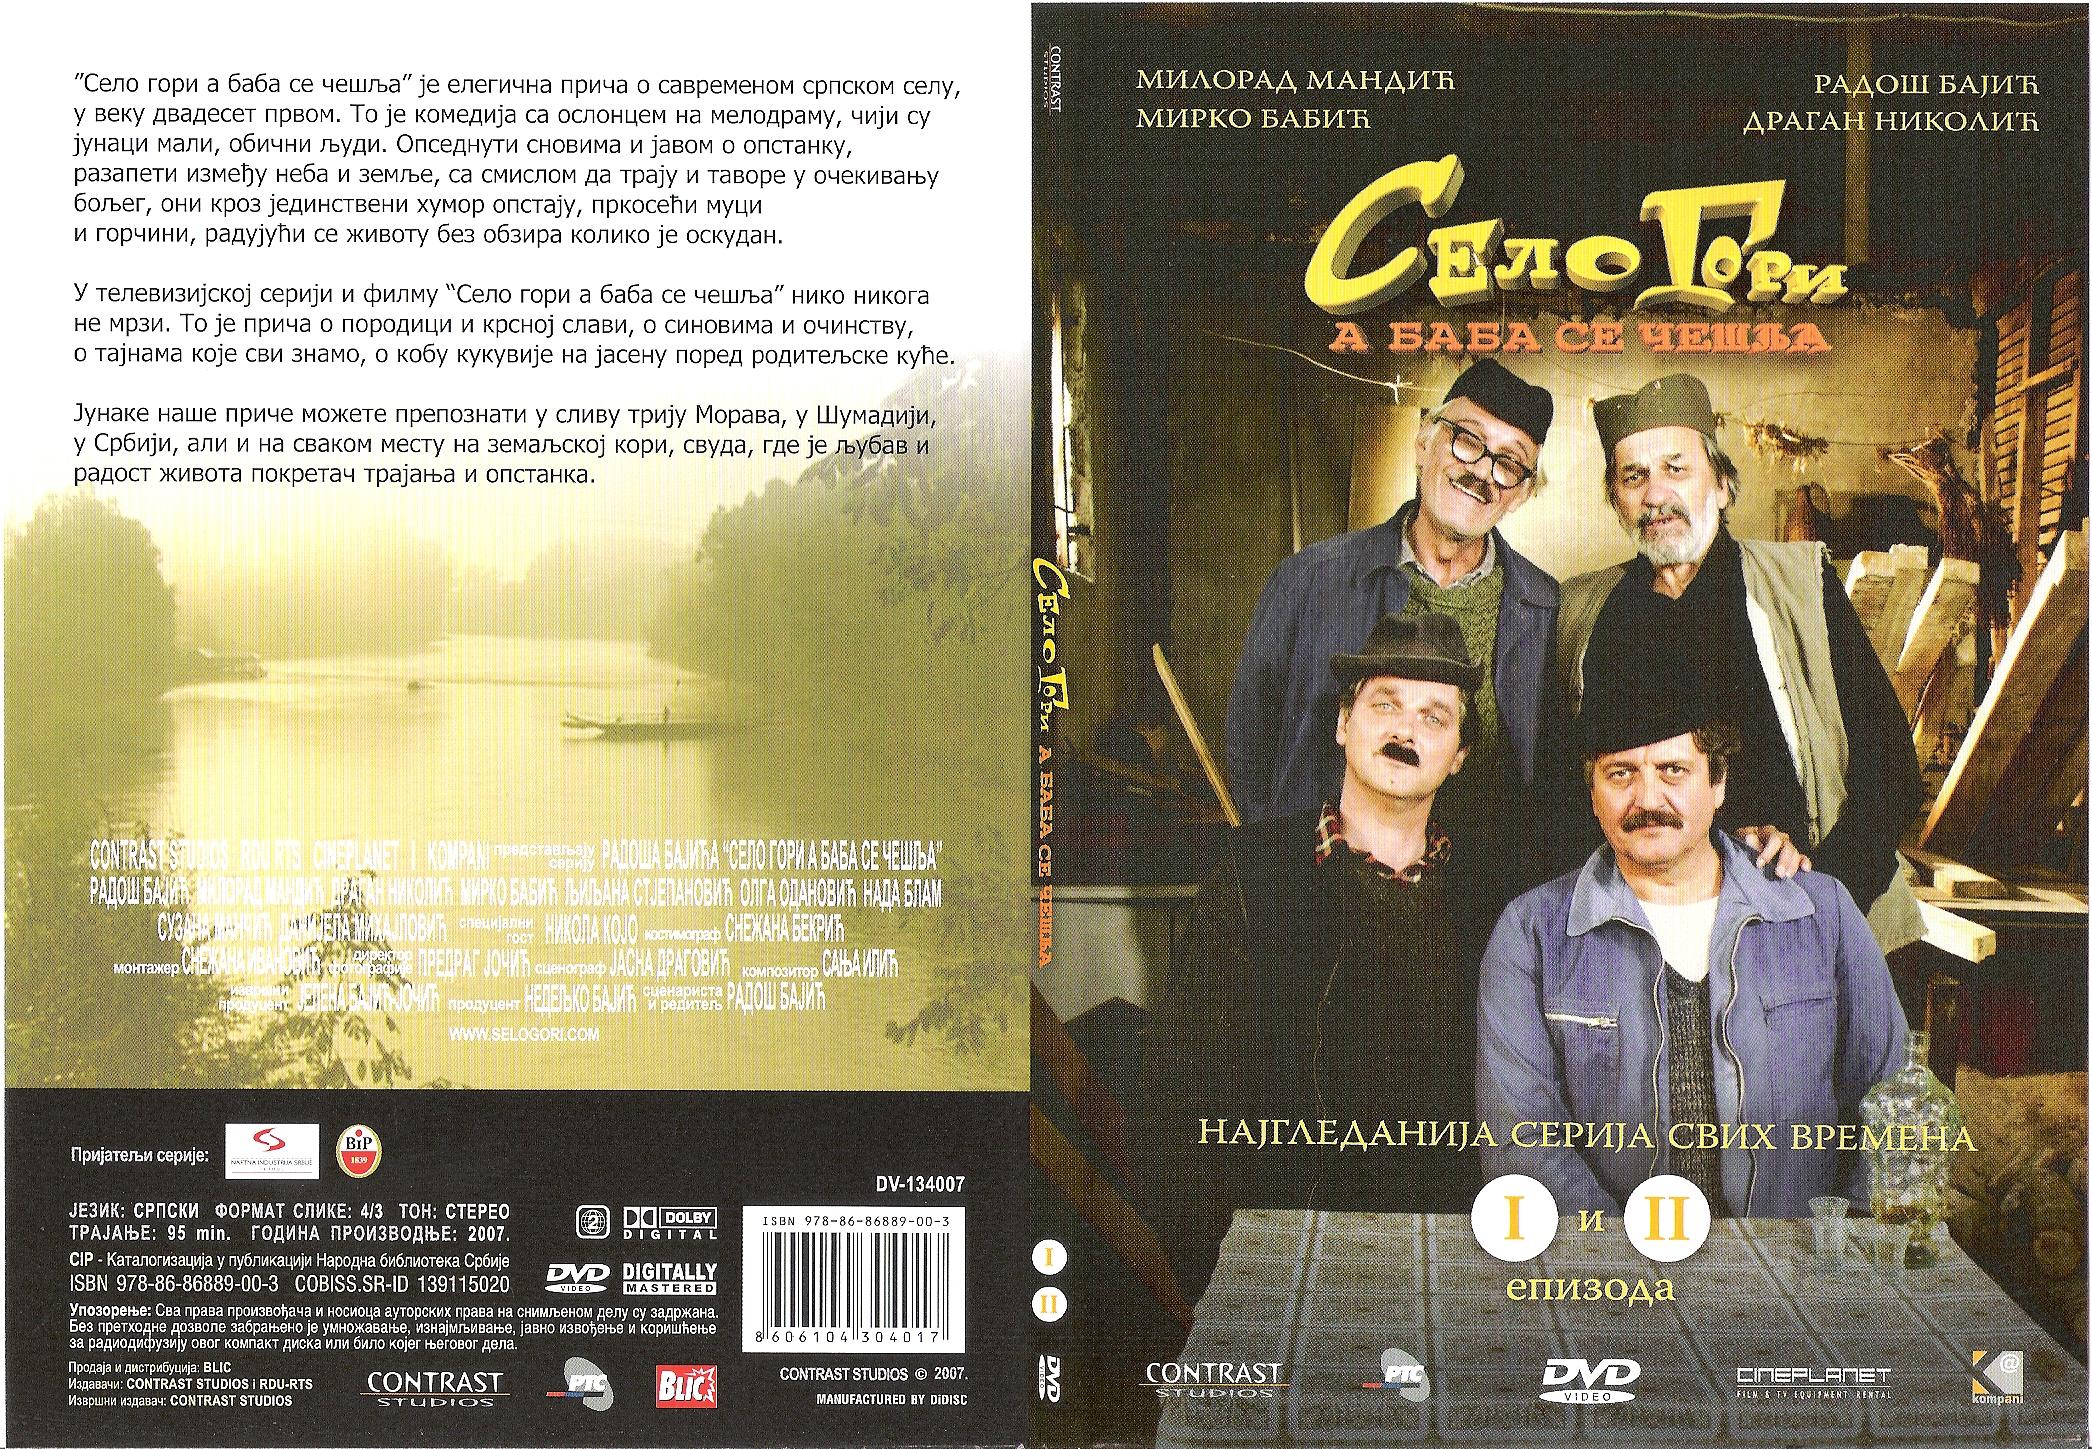 Click to view full size image -  DVD Cover - S - DVD - SELO GORI A BABA SE CESLJA 1 - 2 - DVD - SELO GORI A BABA SE CESLJA 1 - 2.jpg